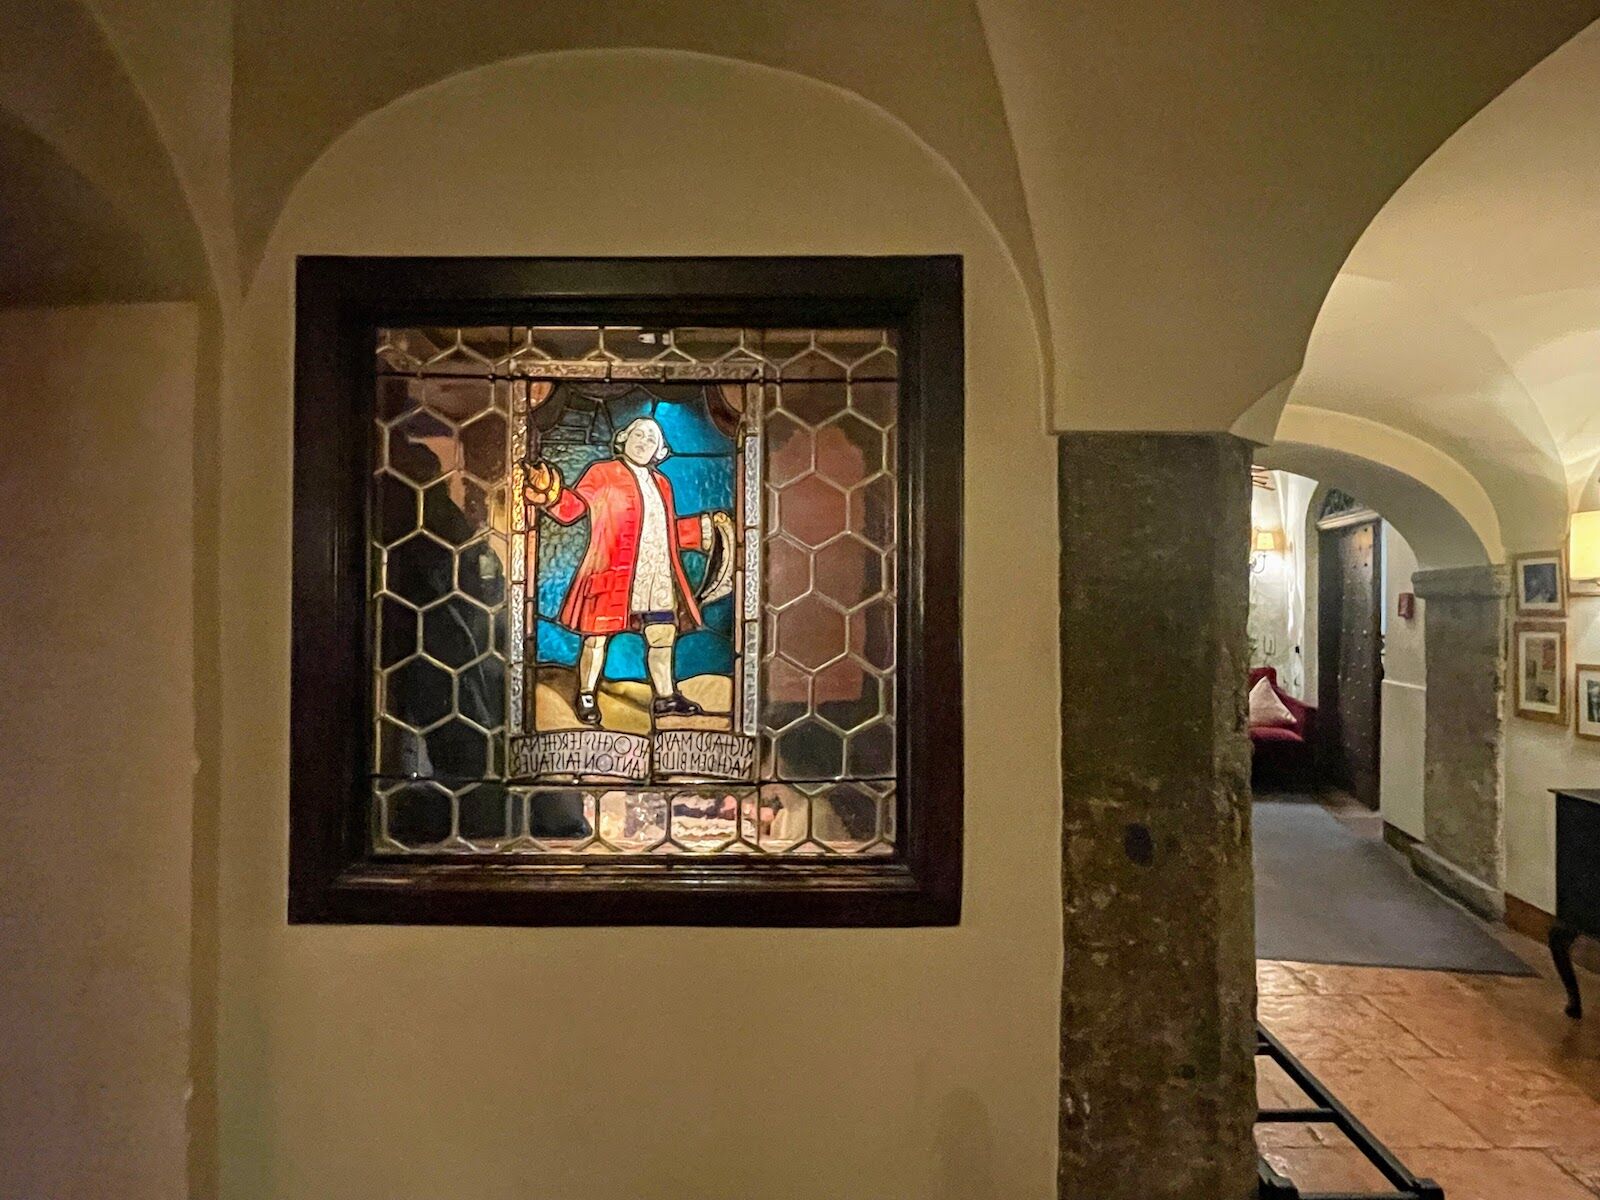 mozart stained glass in worlds oldest restaurant